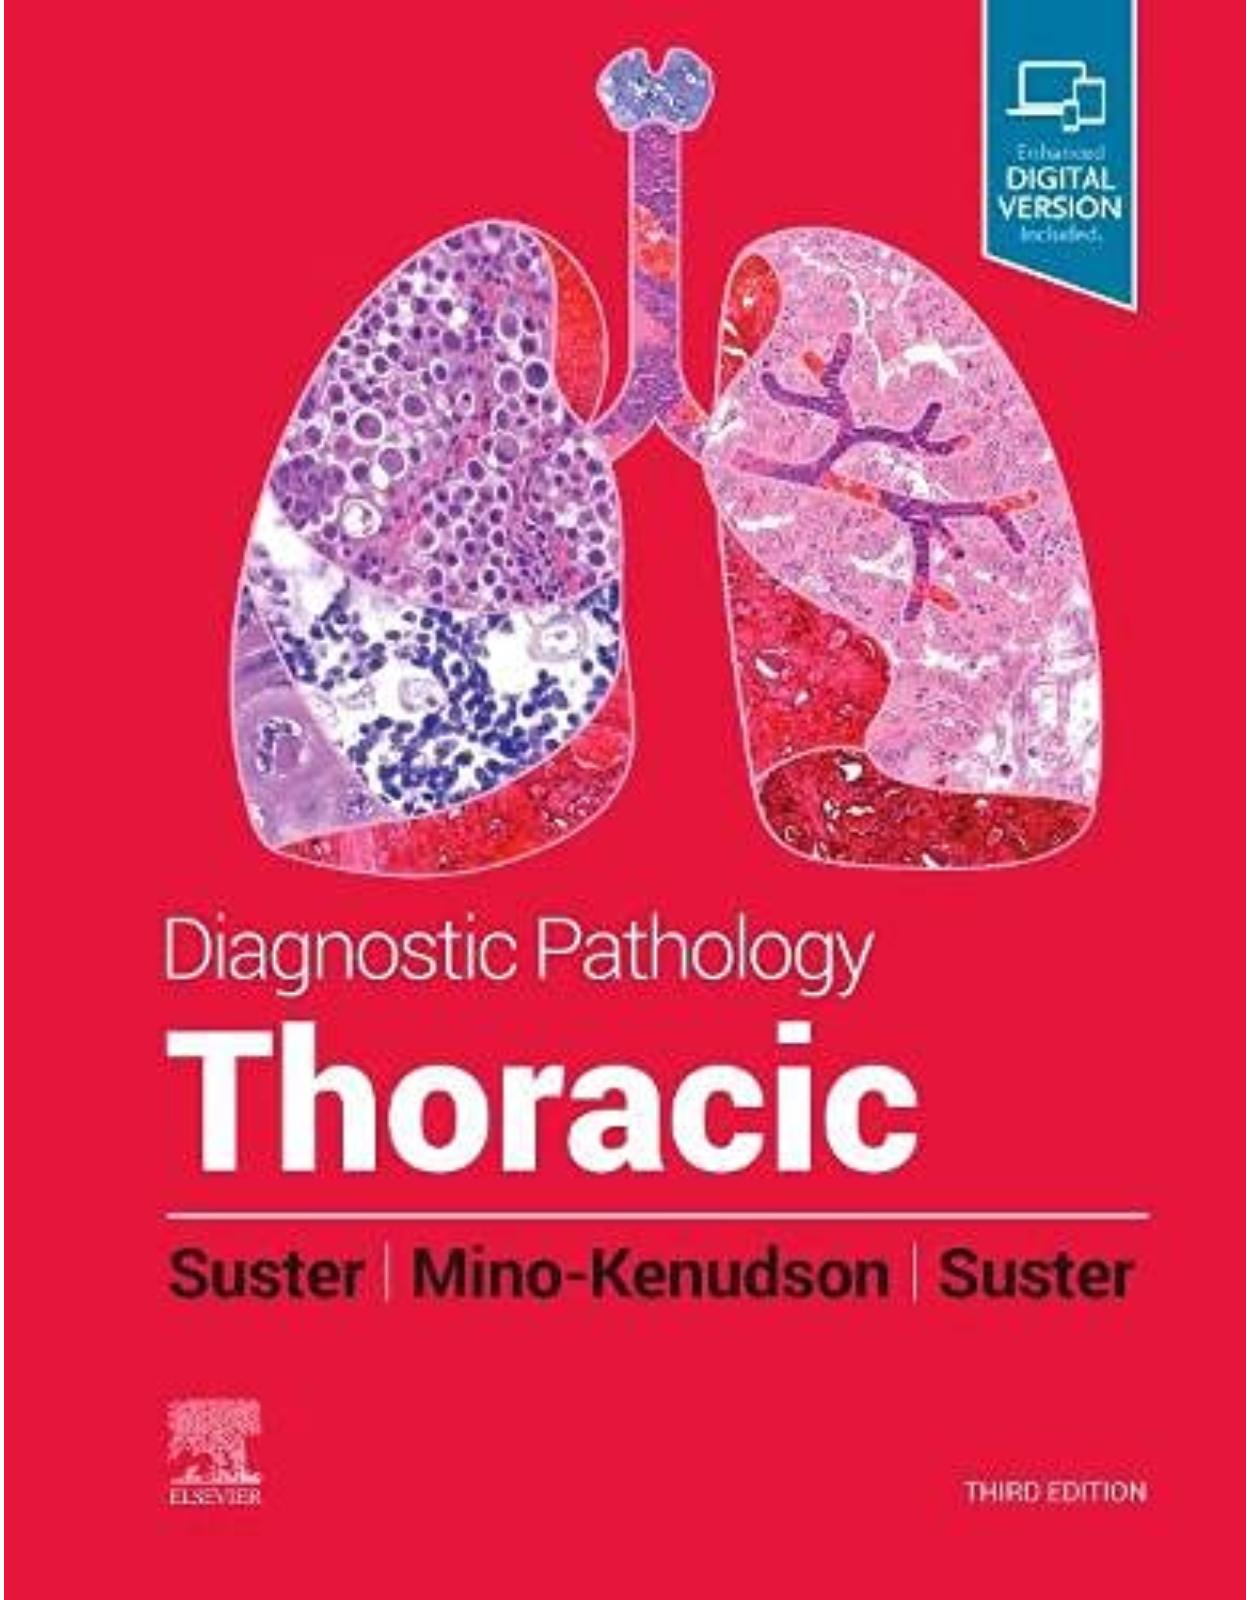 Diagnostic Pathology: Thoracic, 3rd Edition